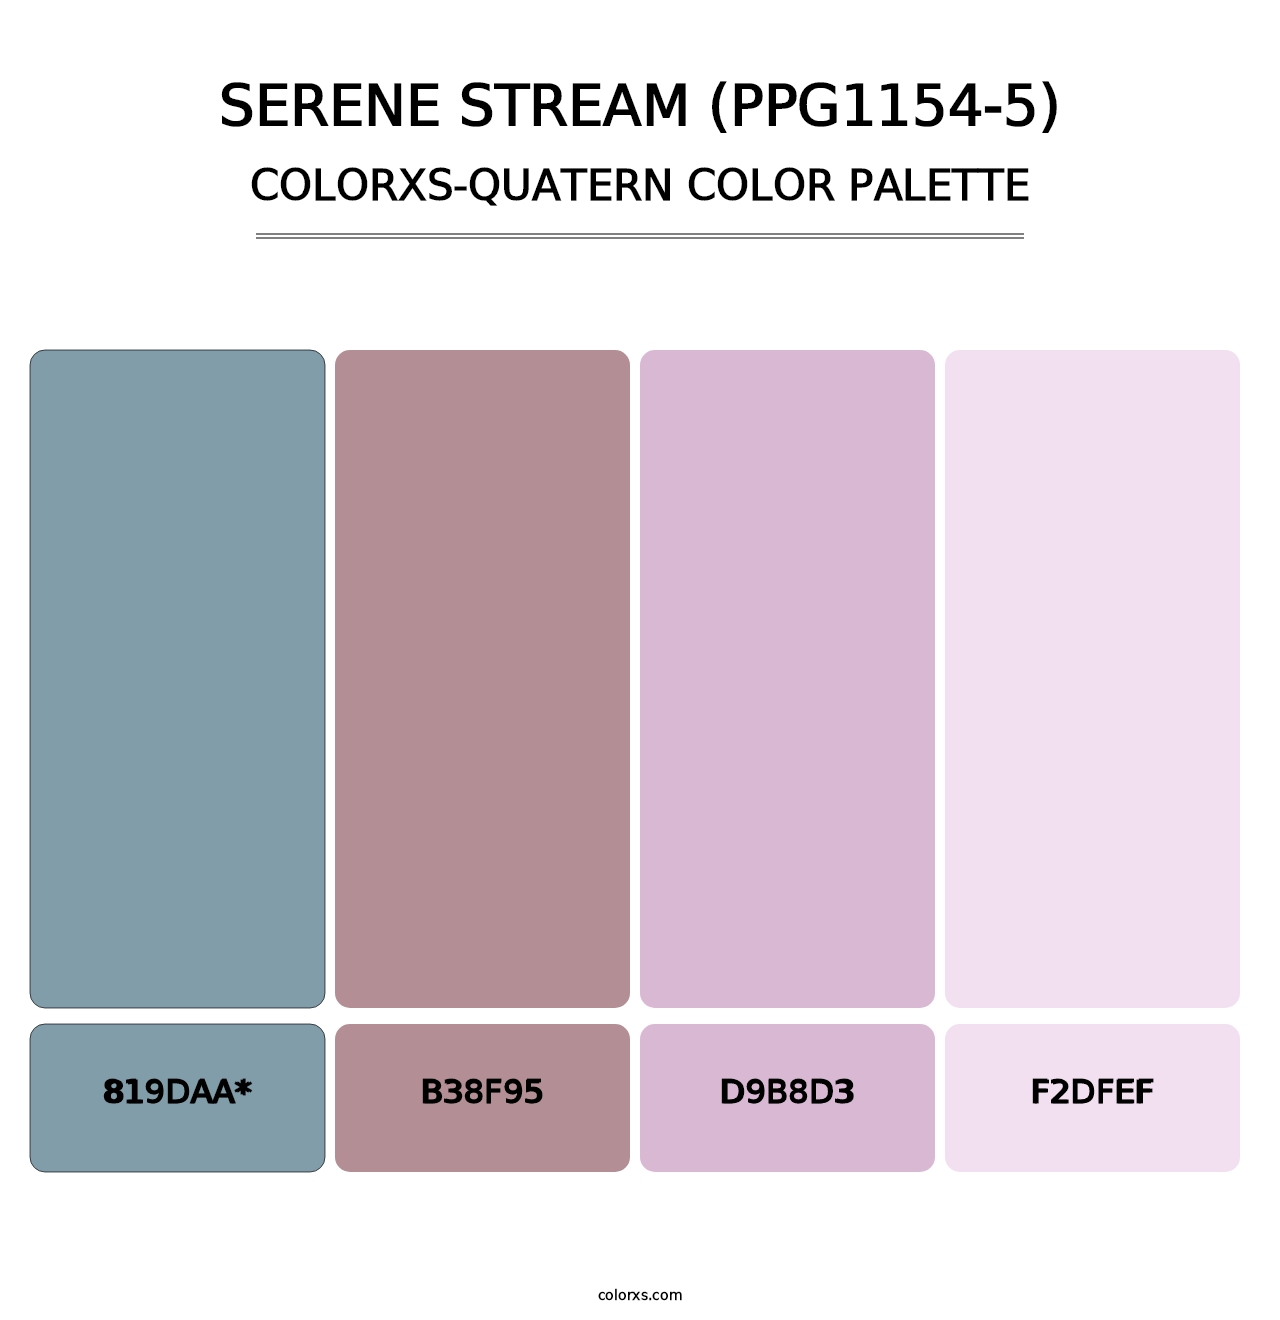 Serene Stream (PPG1154-5) - Colorxs Quatern Palette